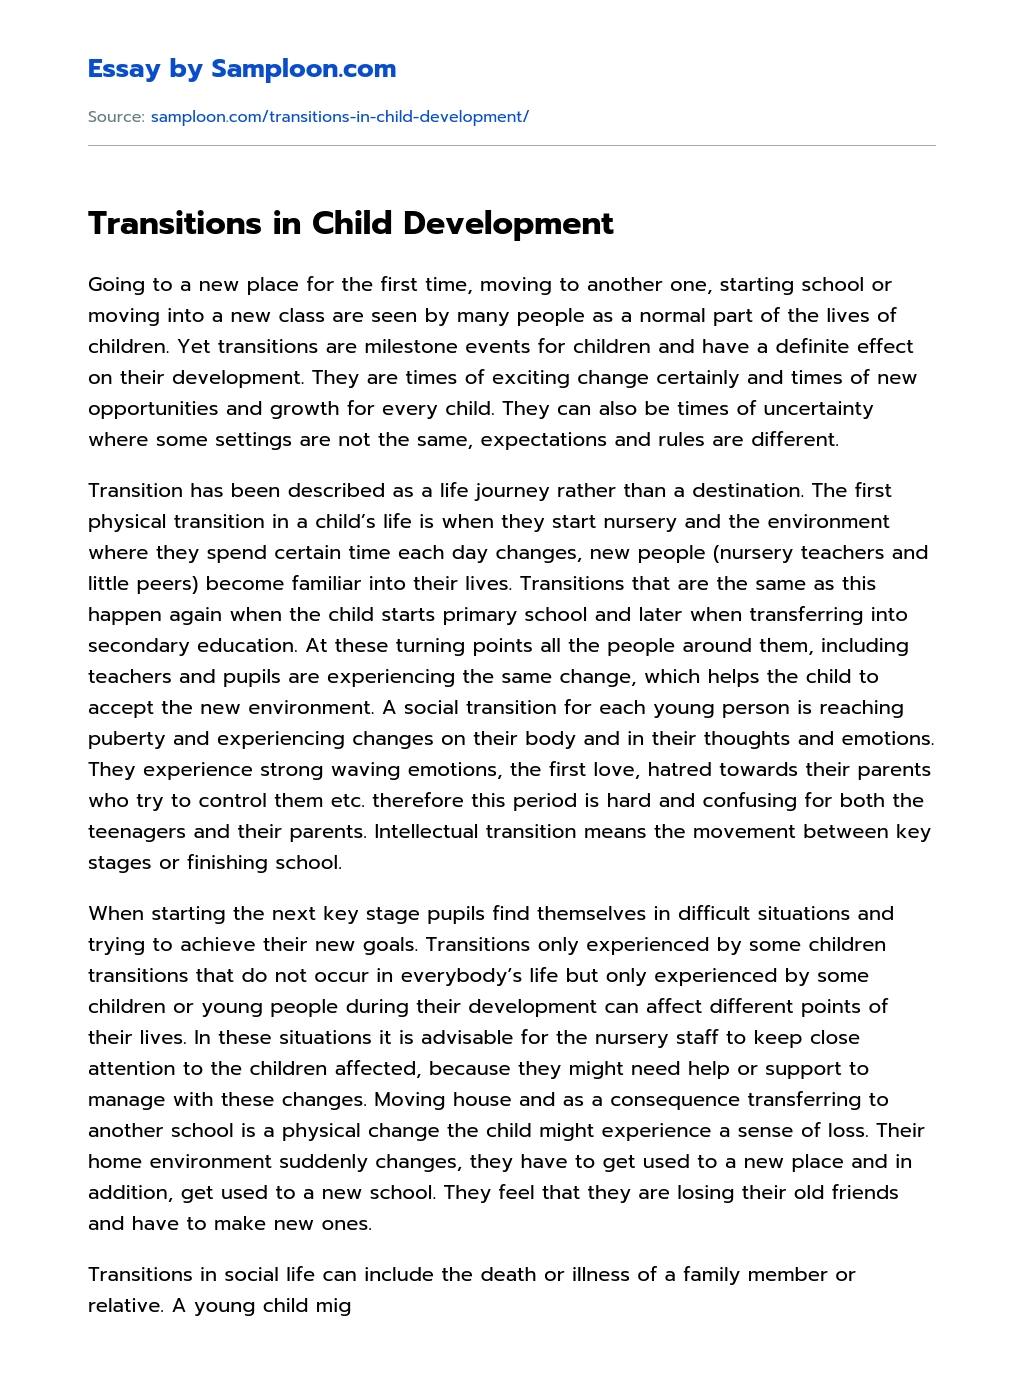 Transitions in Child Development essay